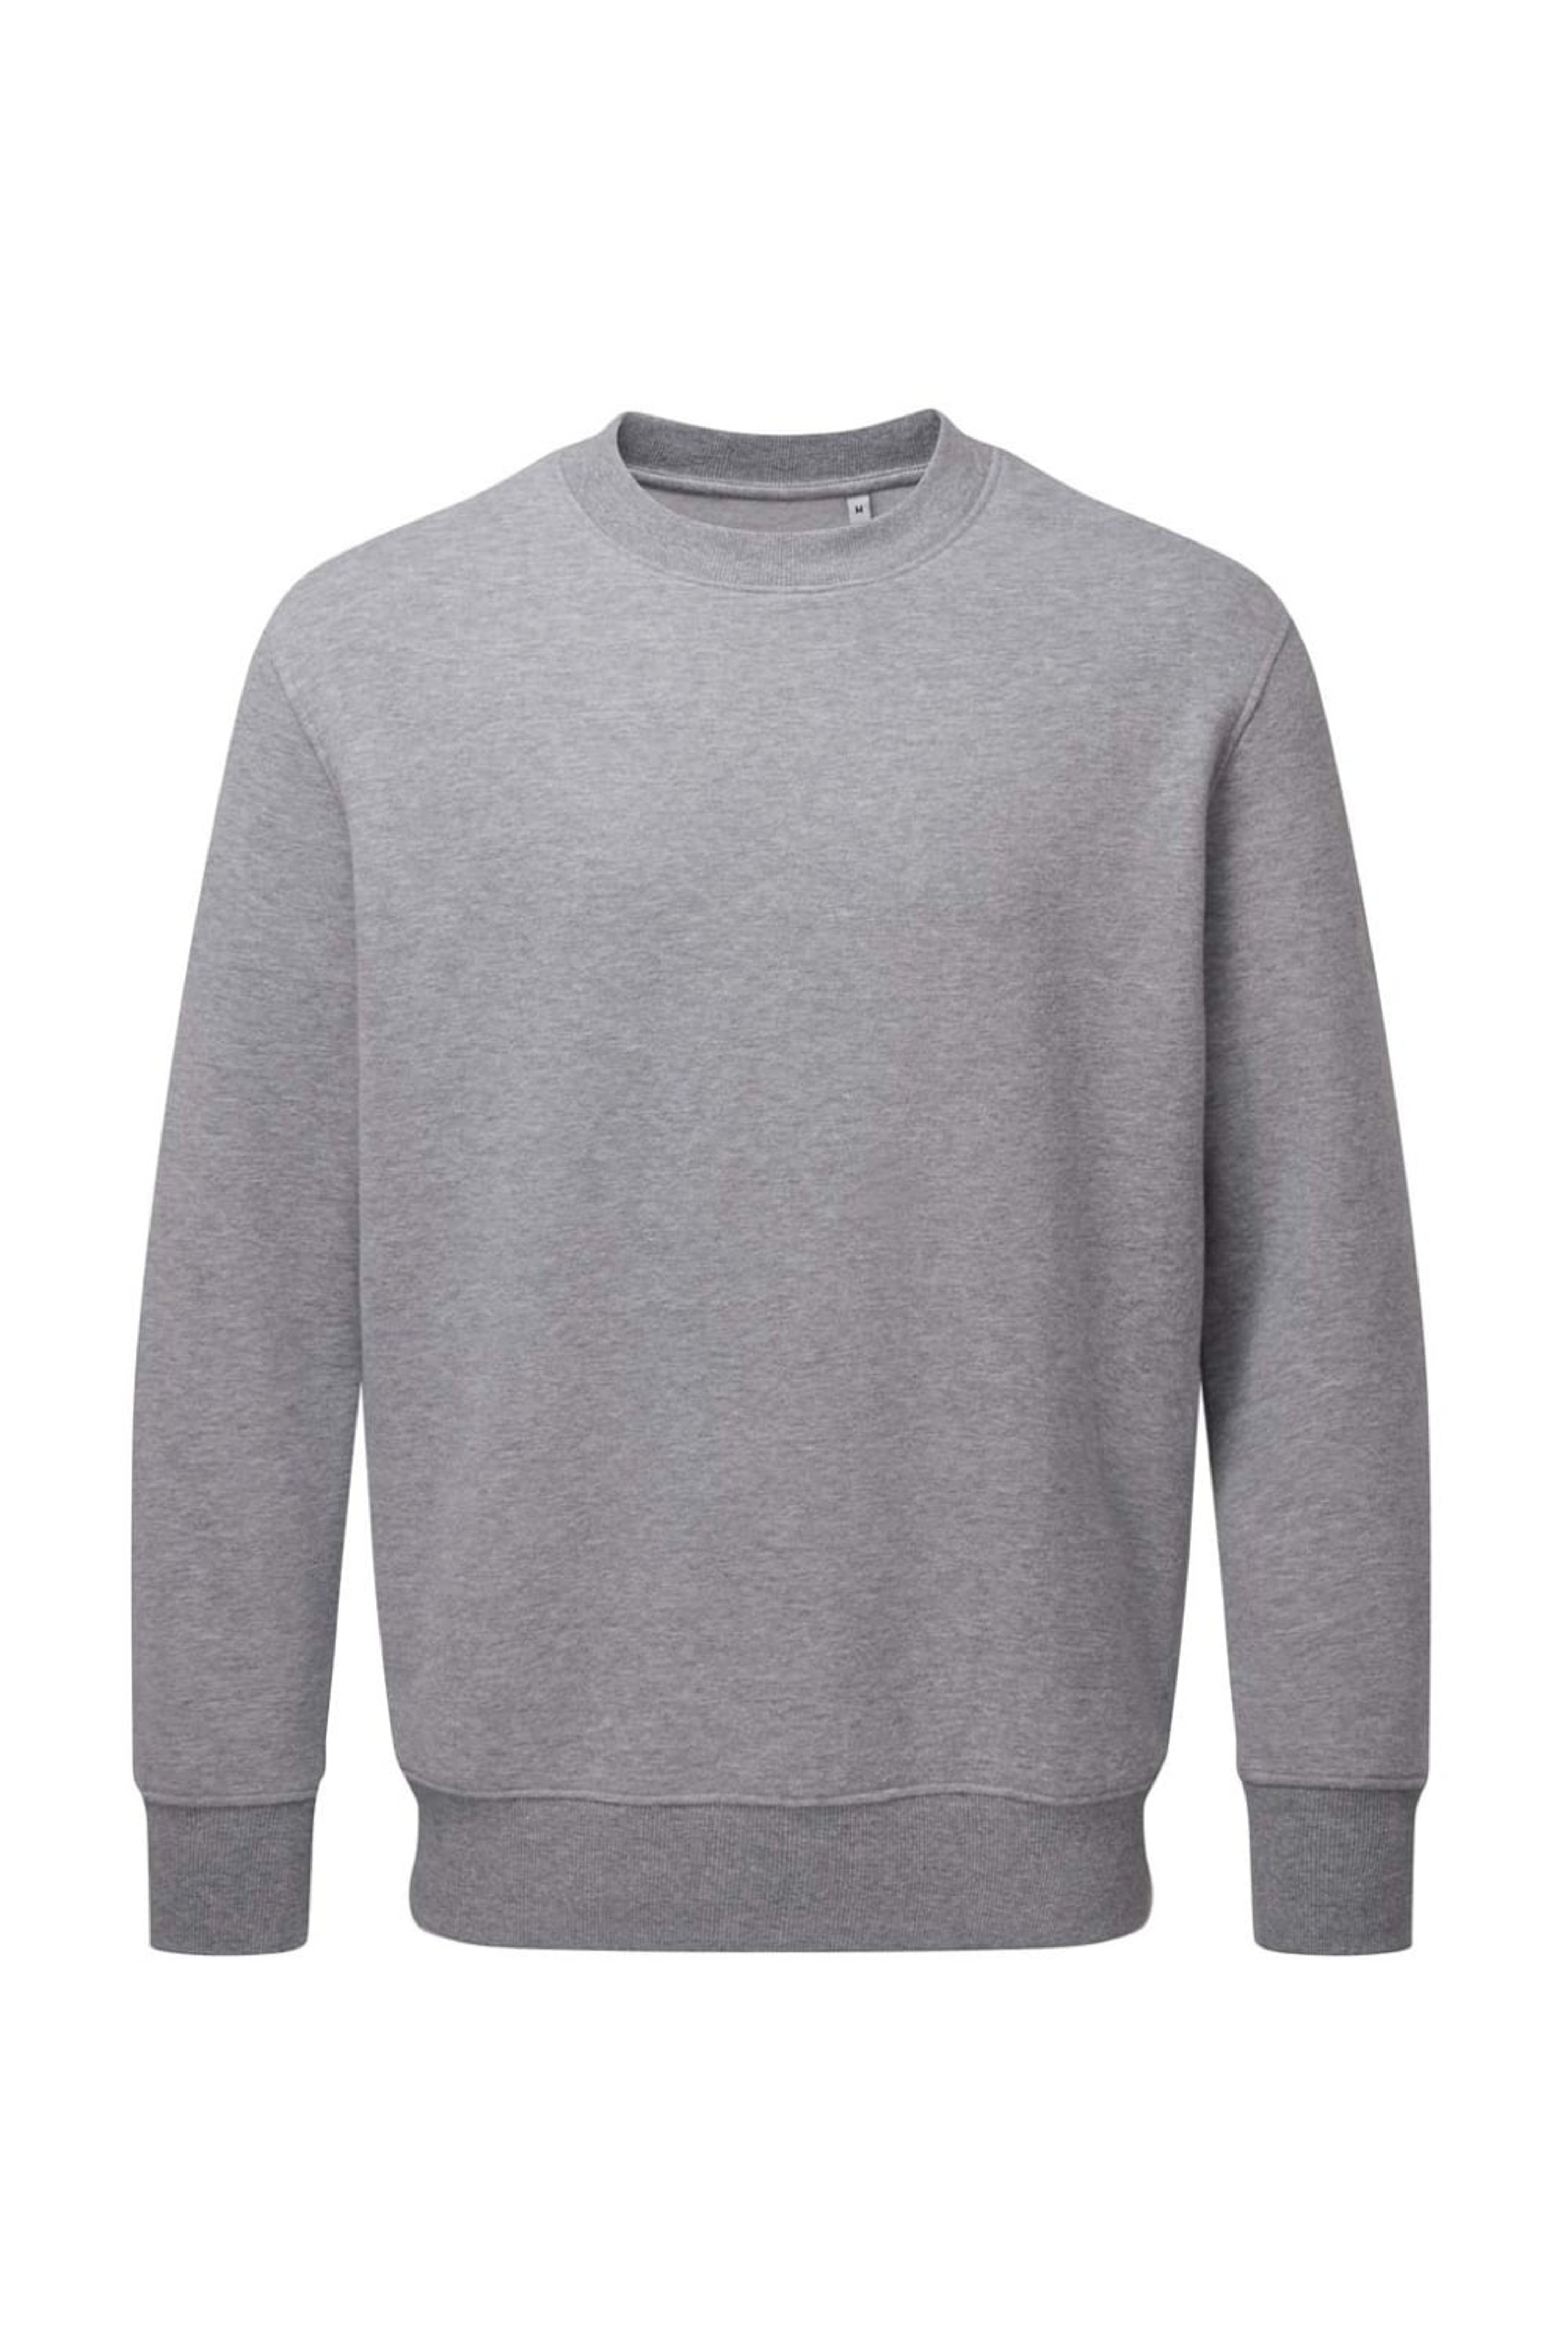 Anthem Unisex Adult Marl Organic Sweatshirt In Grey